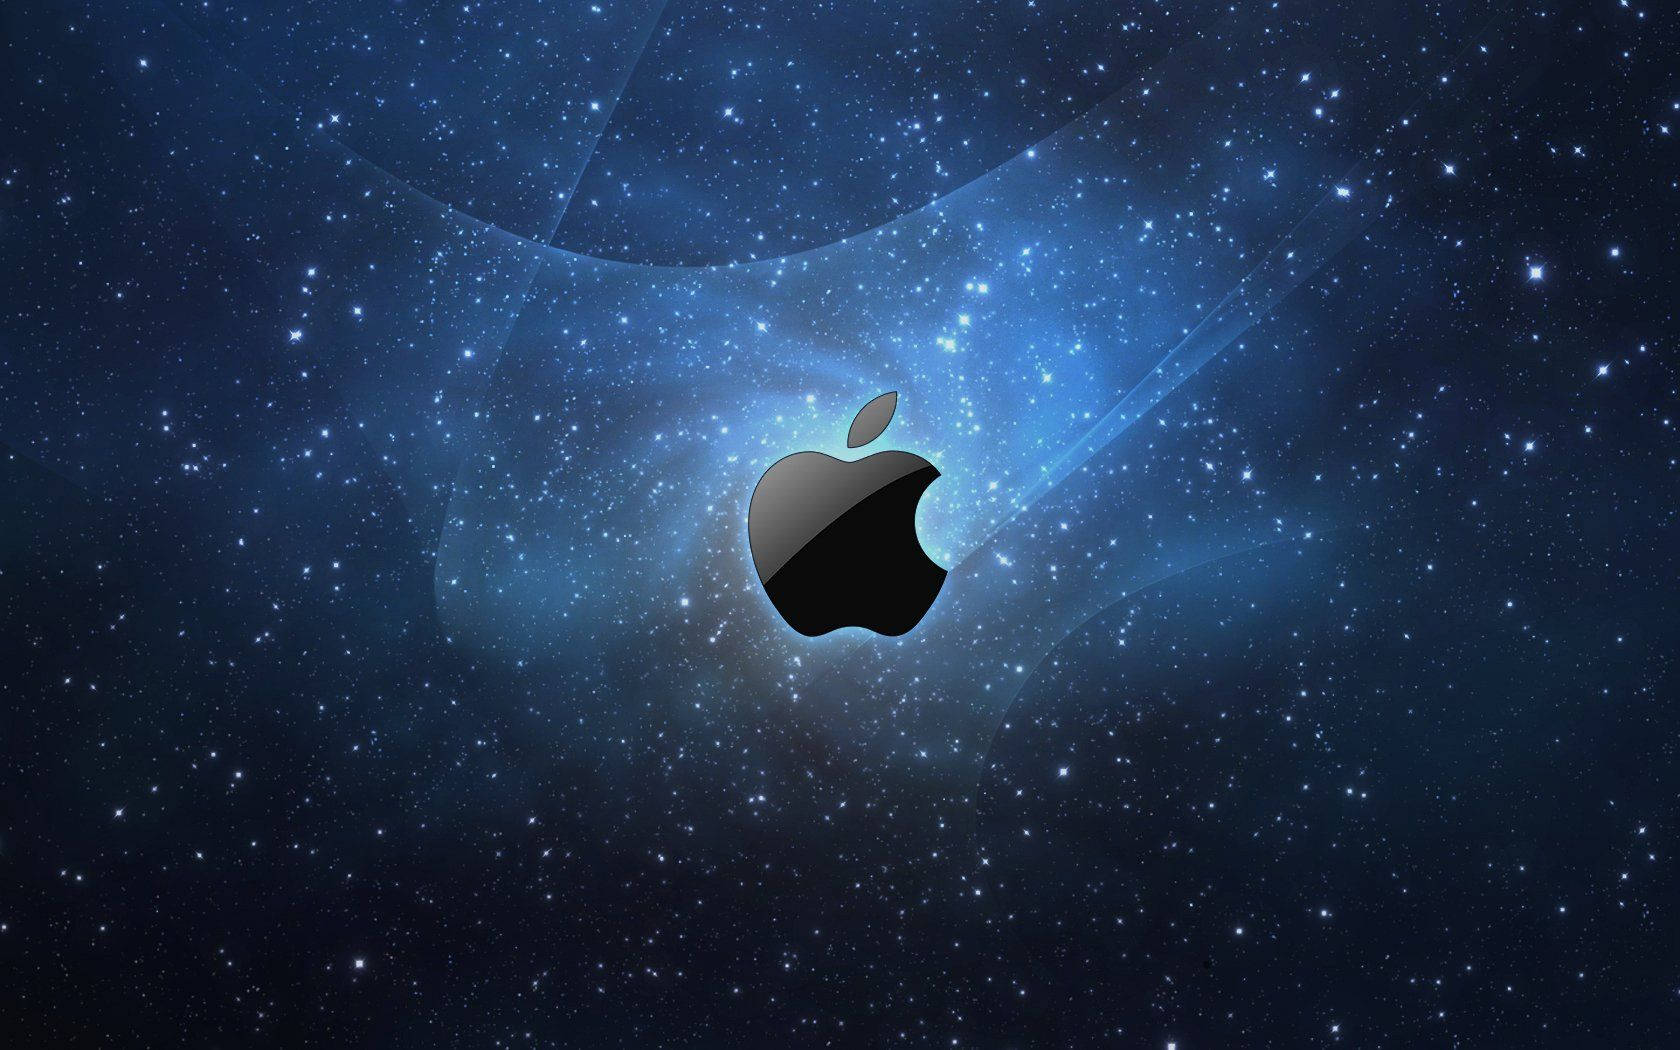 "A Beautiful Apple Logo Against a Vibrant Blue Galaxy" Wallpaper